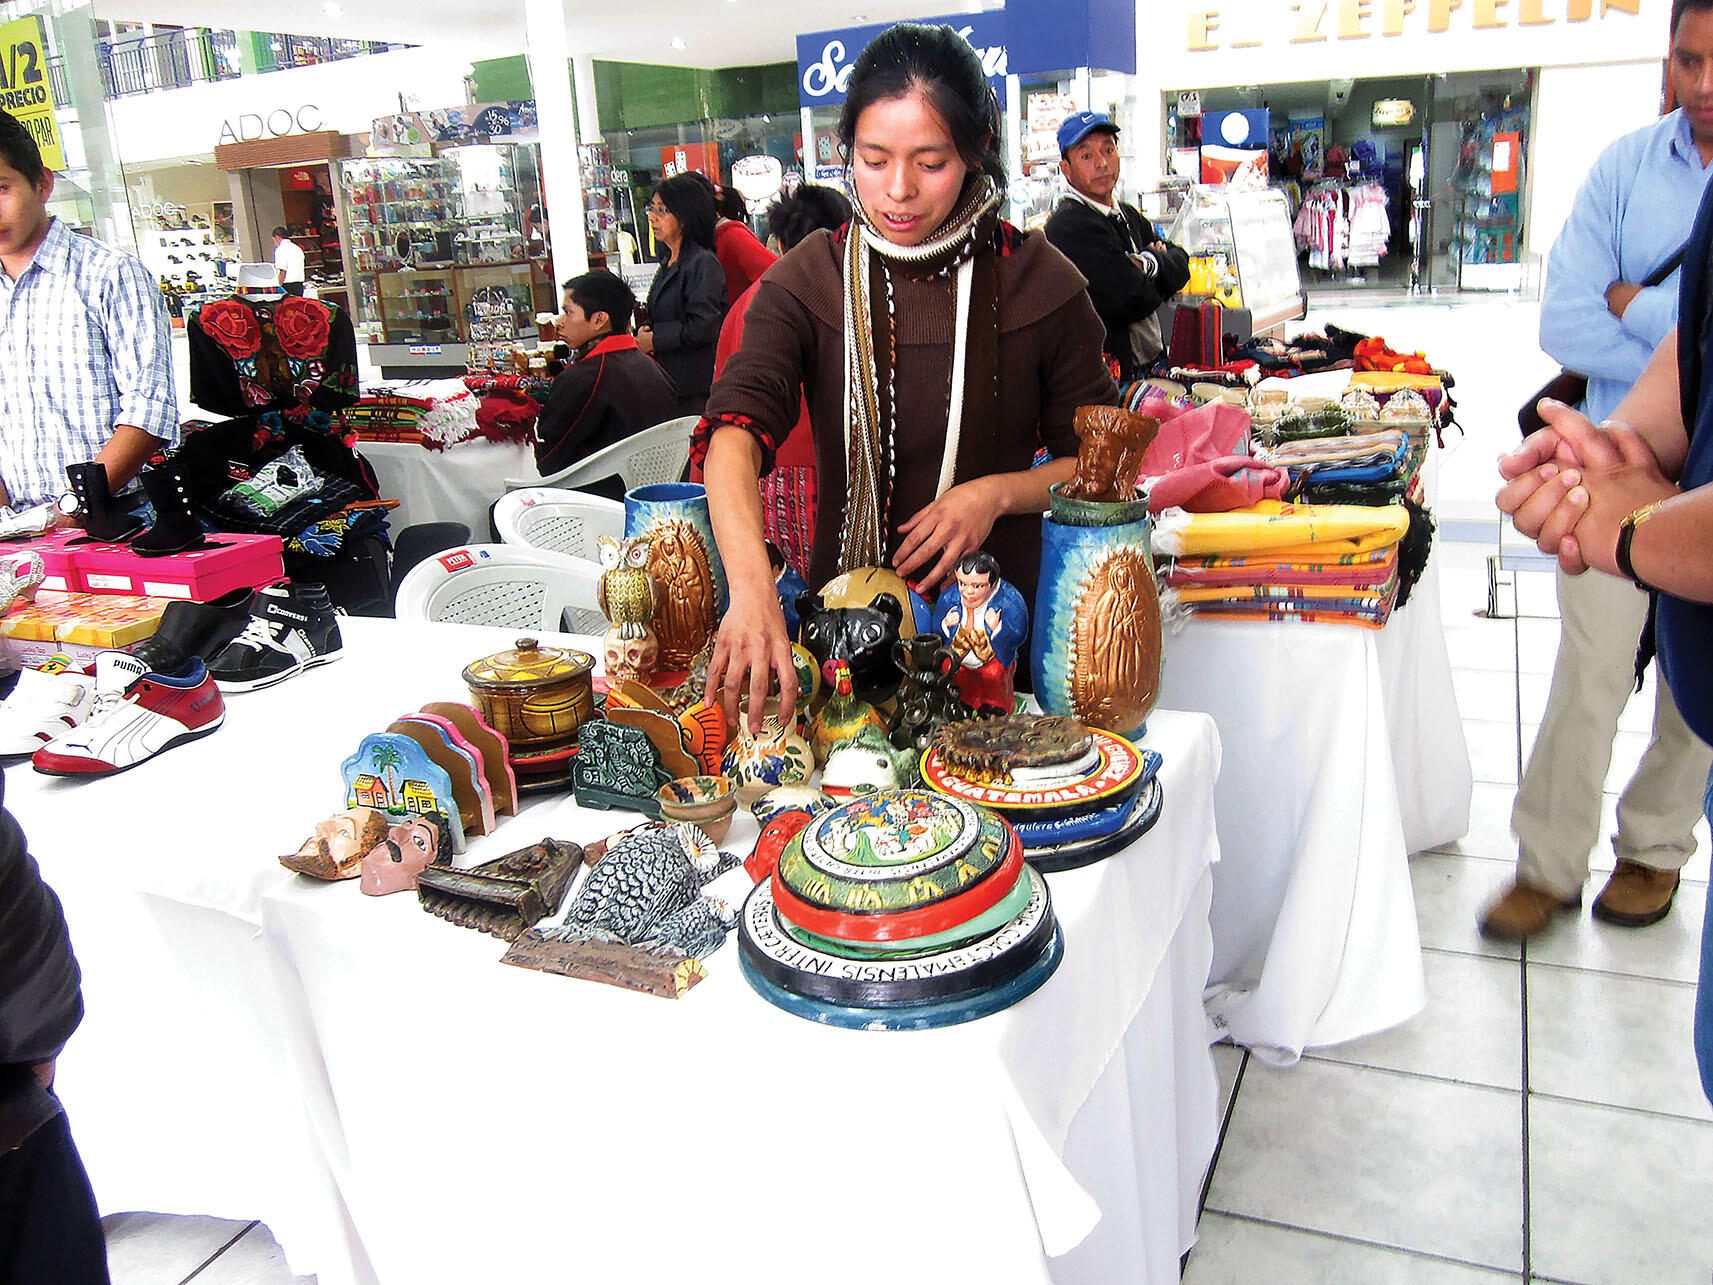 A Grupos Gestures member selling her craftwares at a local fair in Quetzaltenango, Guatemala. (Photo by Karen Chapple.)